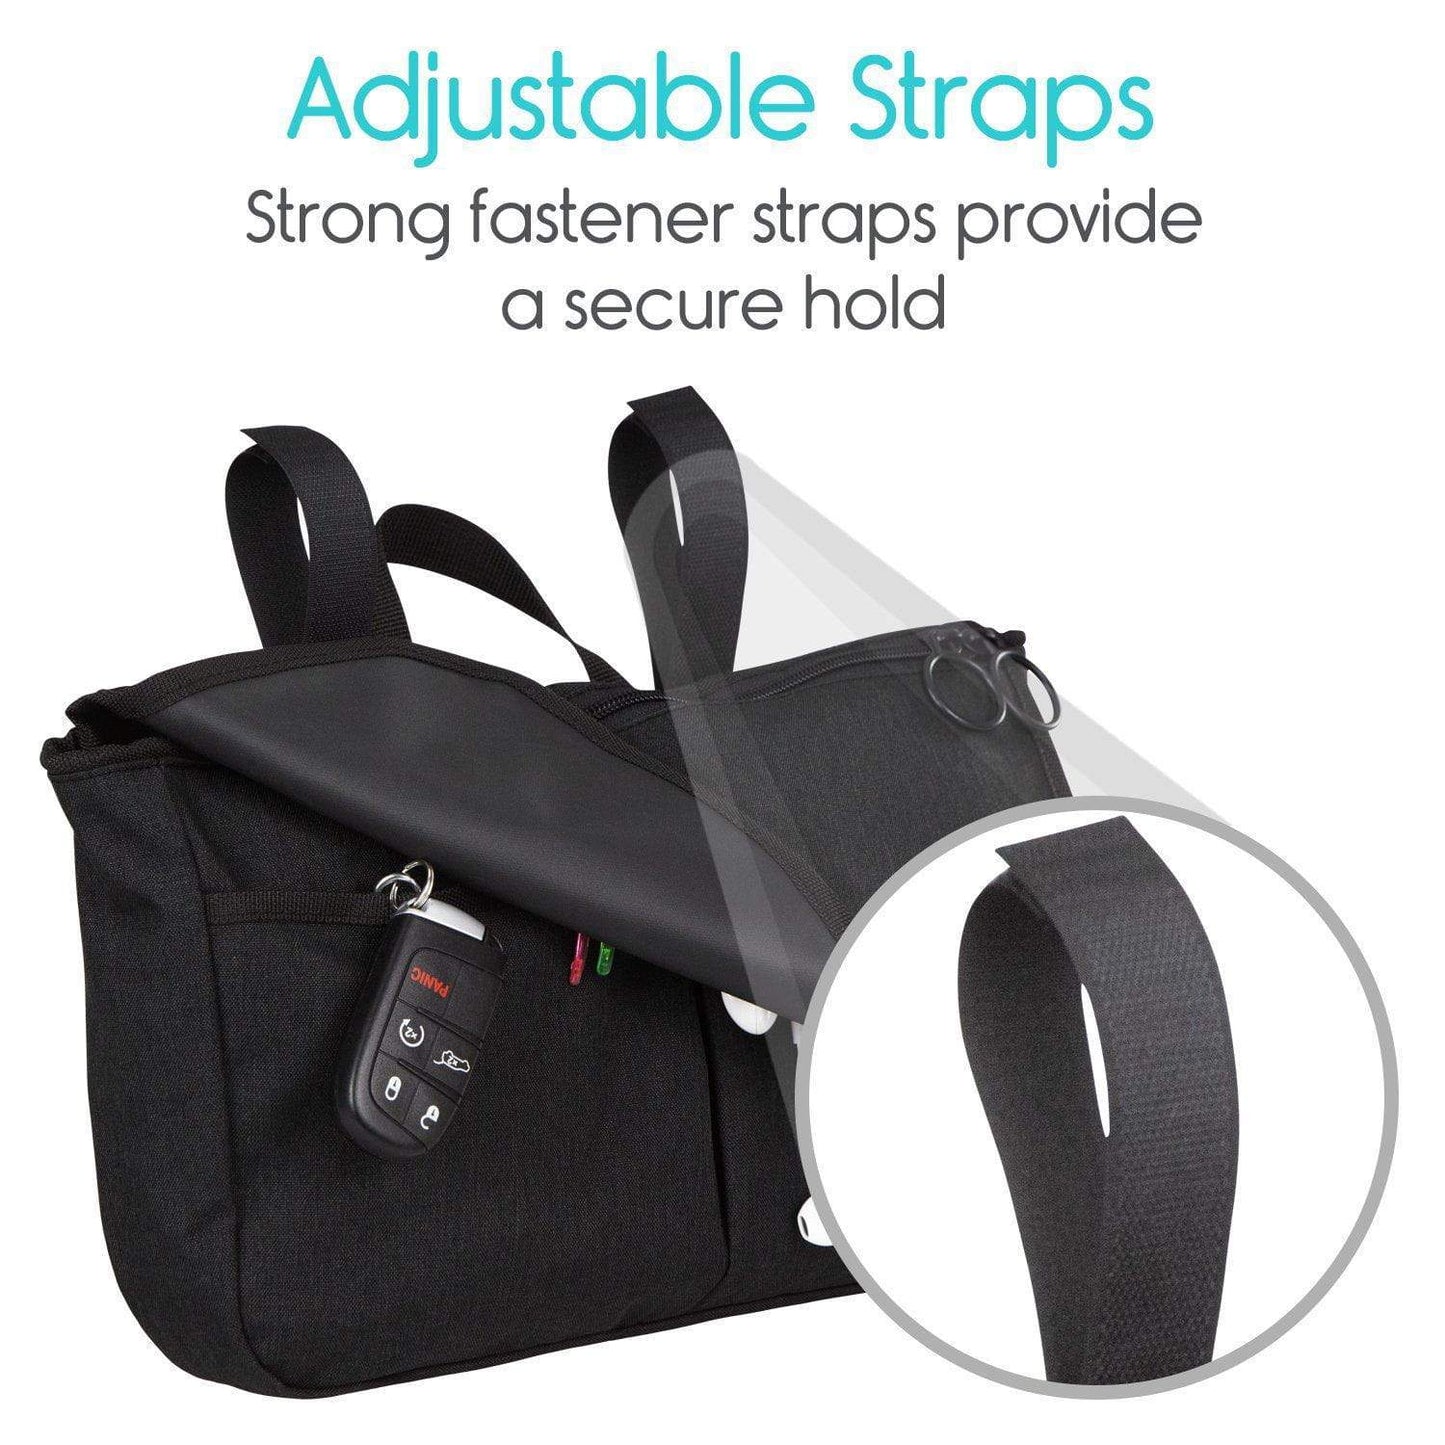 Dark Slate Gray Vive Health Mobility Side Bag